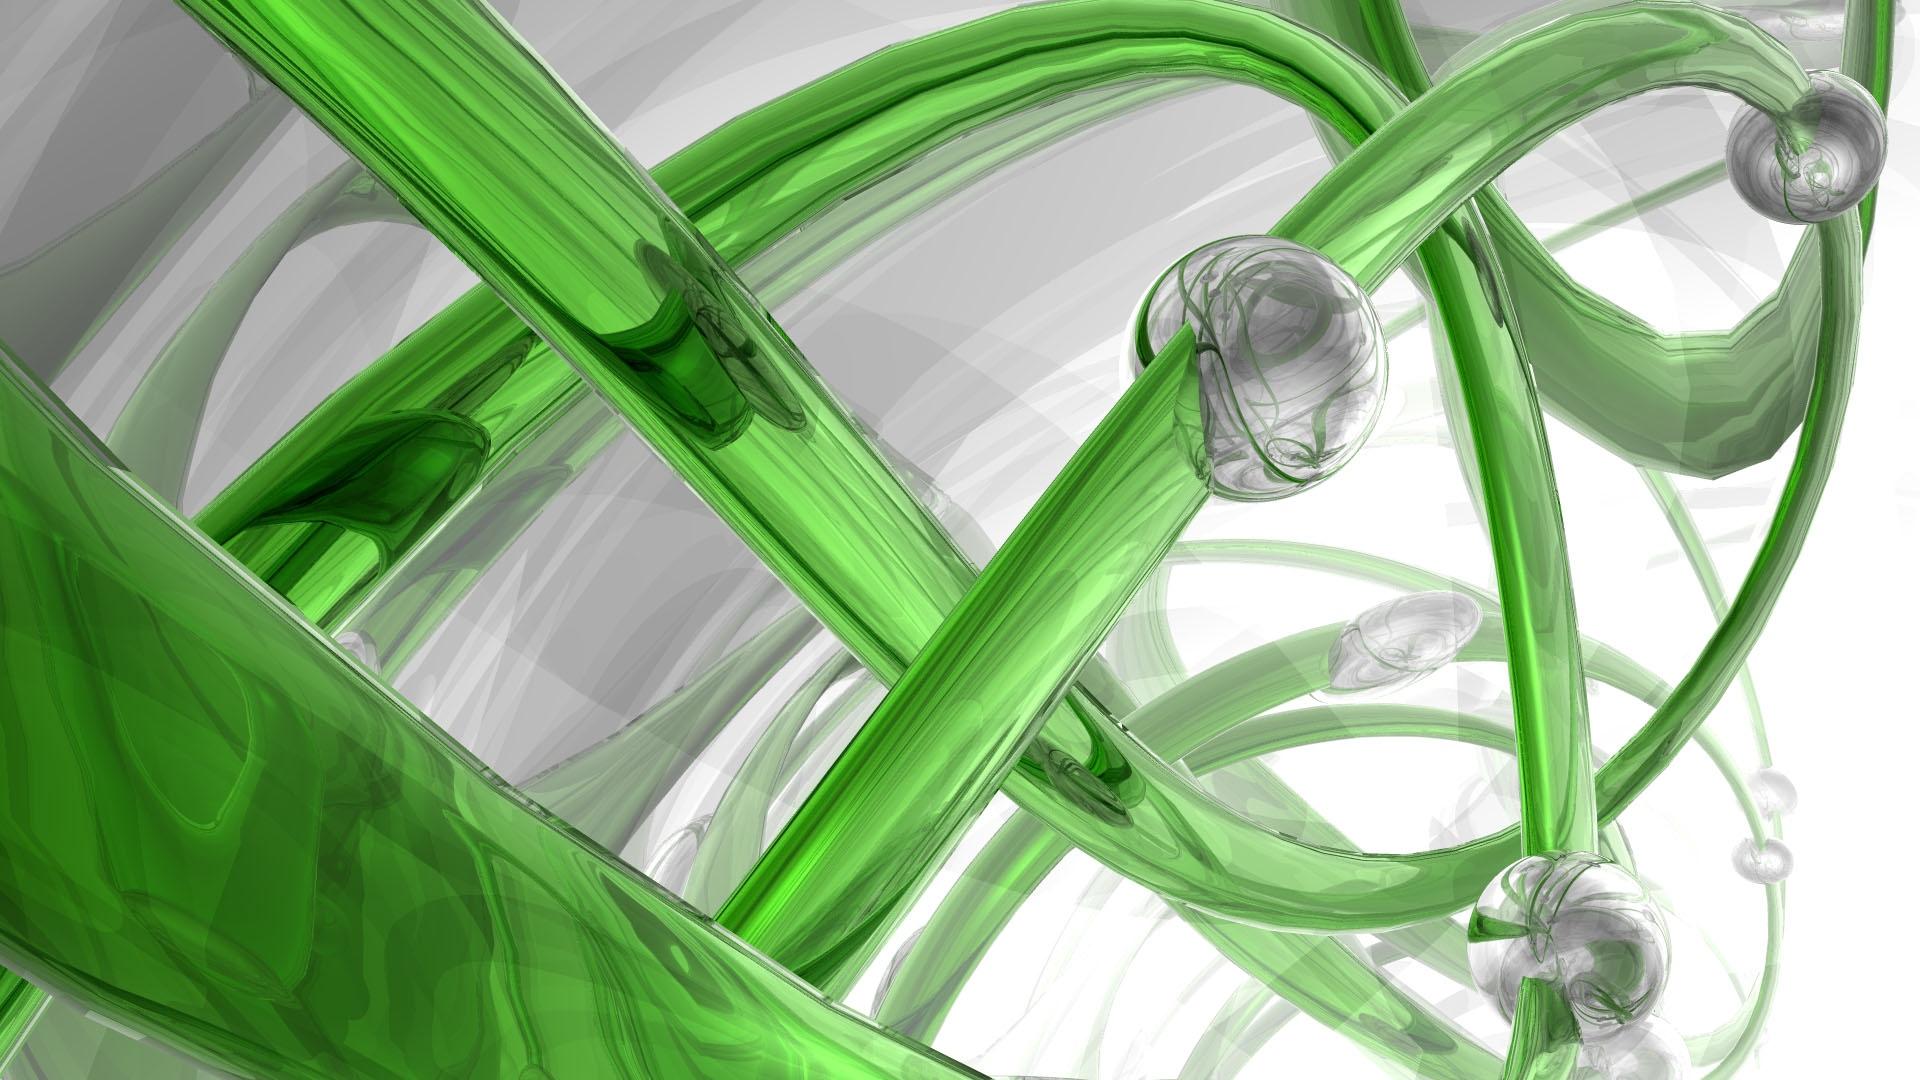 Download wallpaper 1920x1080 3D, spiral, glass, green, white